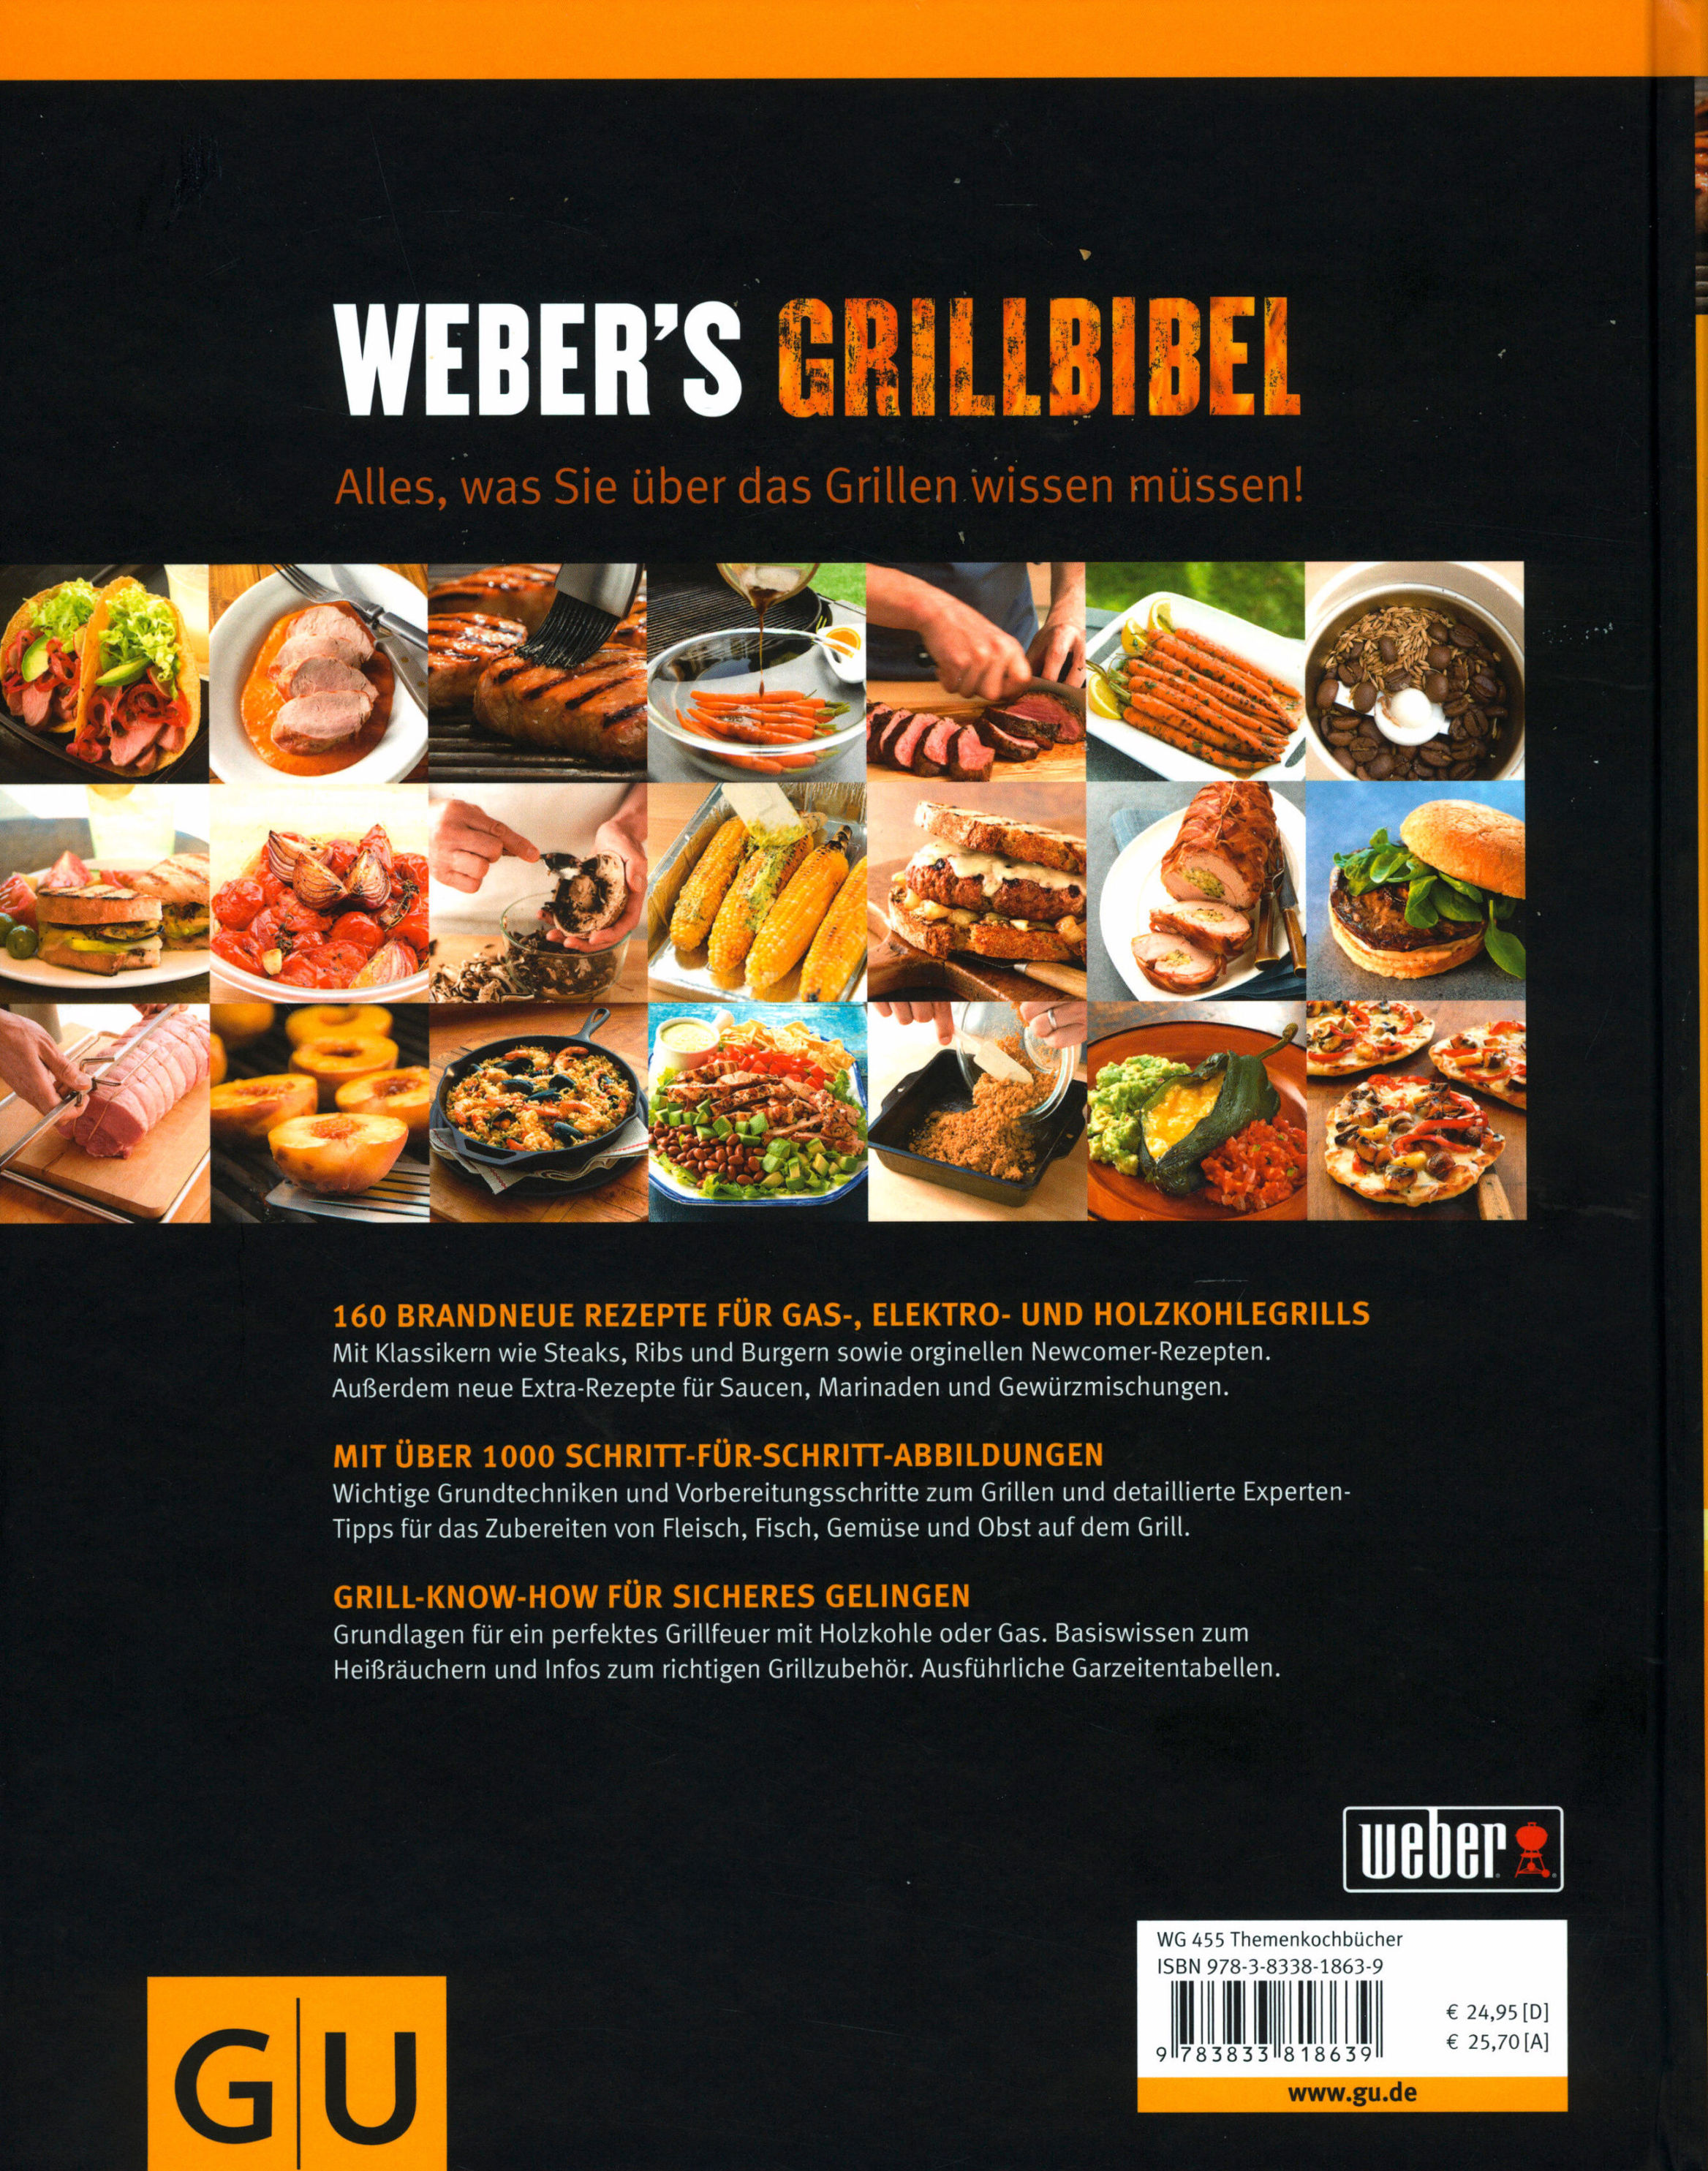 Weber Grillbibel: Rezepte Buch online kaufen bei Weltbild.at